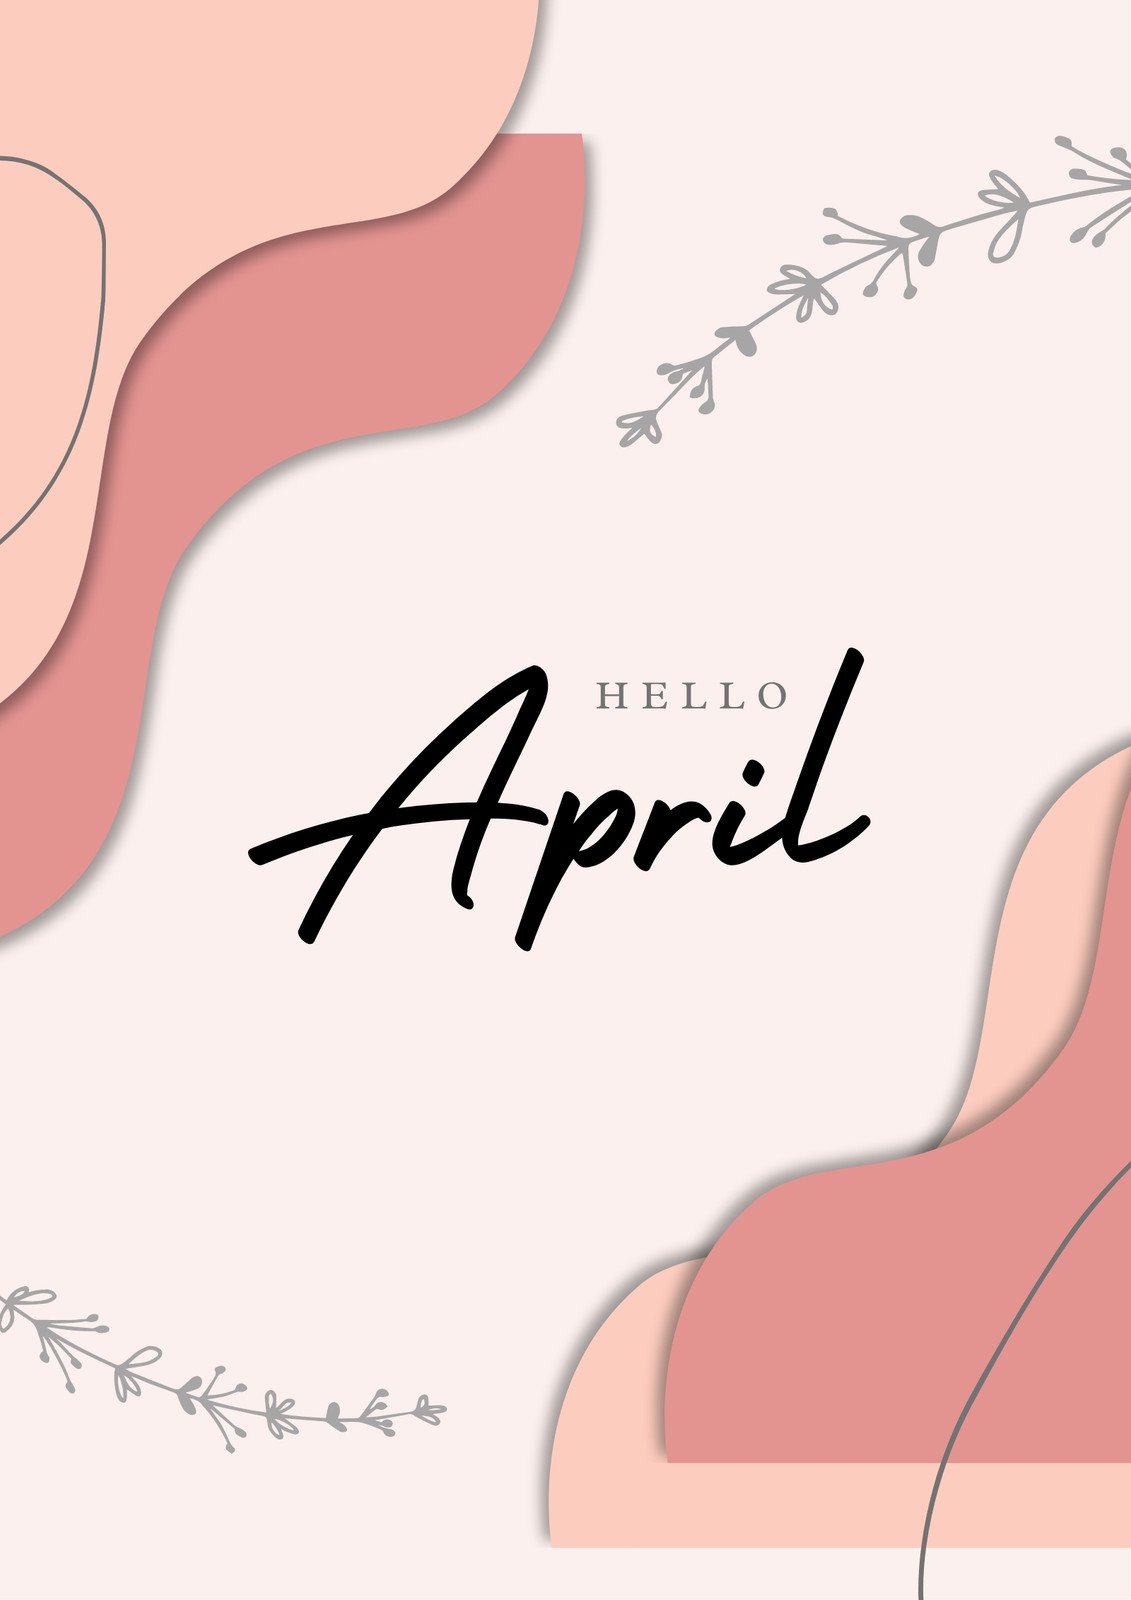 April 2019 Free Desktop Calendar/Wallpaper from Marmalead